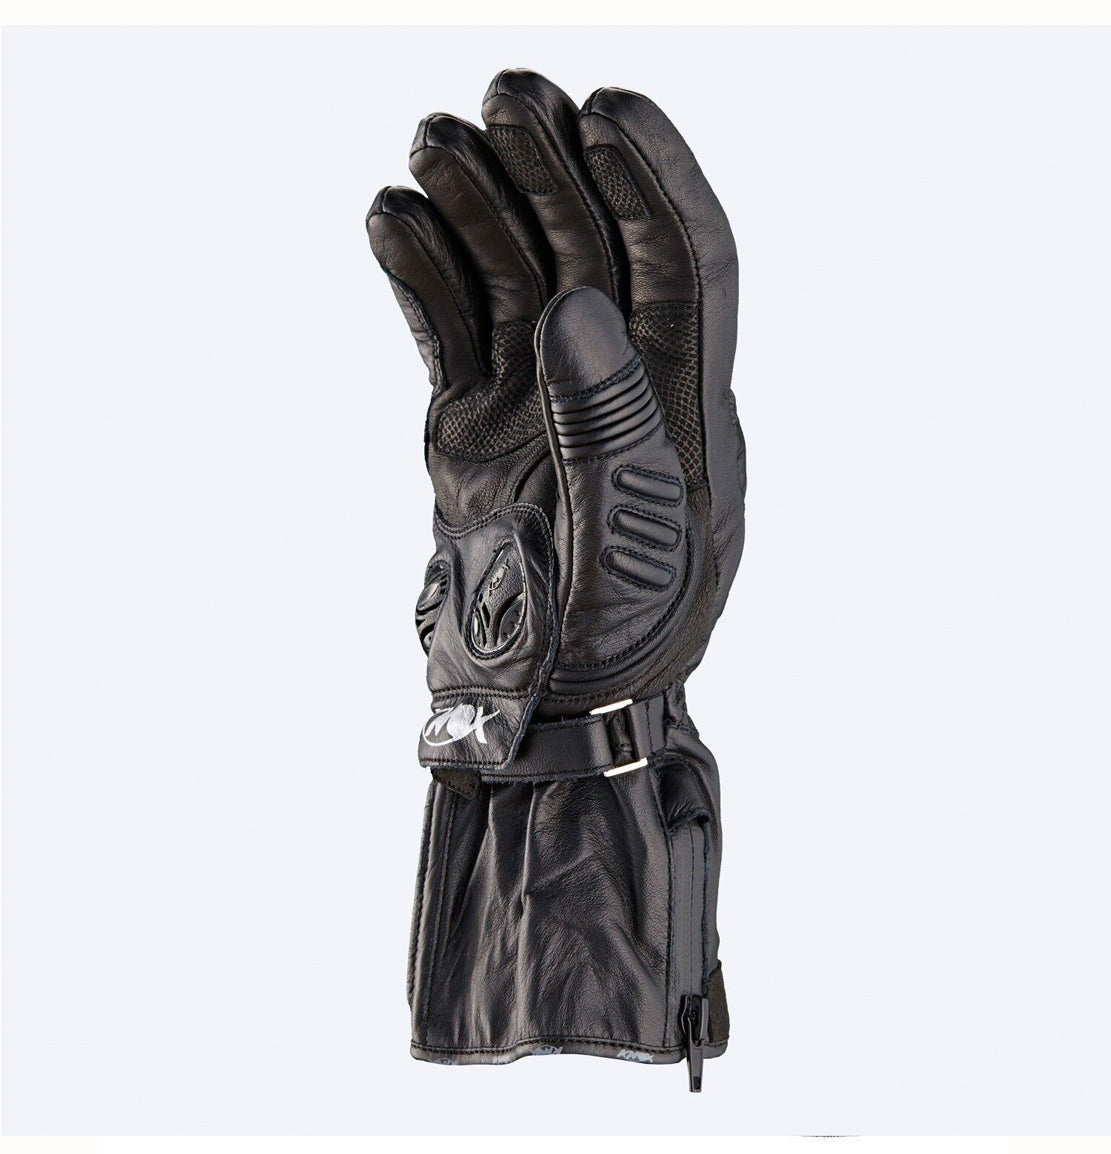 KNOX - Covert Glove - Black